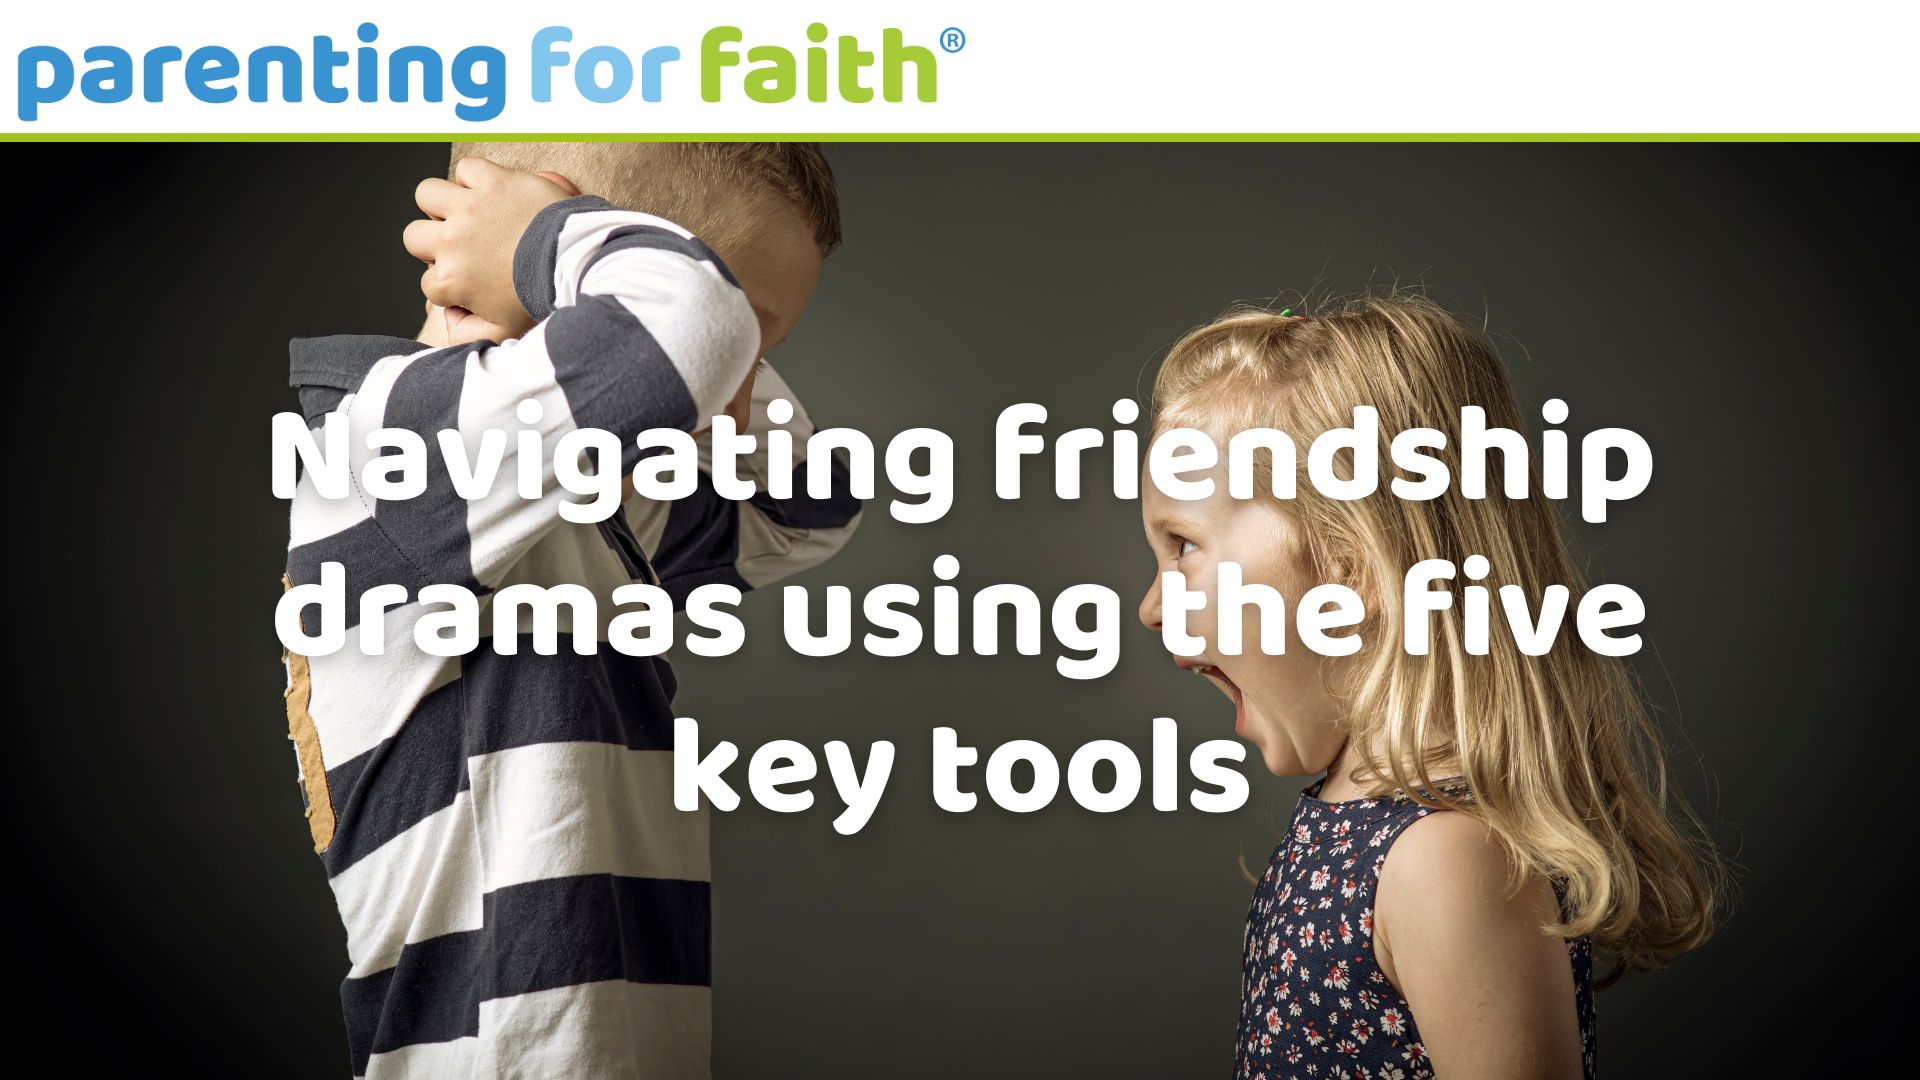 Navigating friendship dramas using the five key tools image credit Tiero